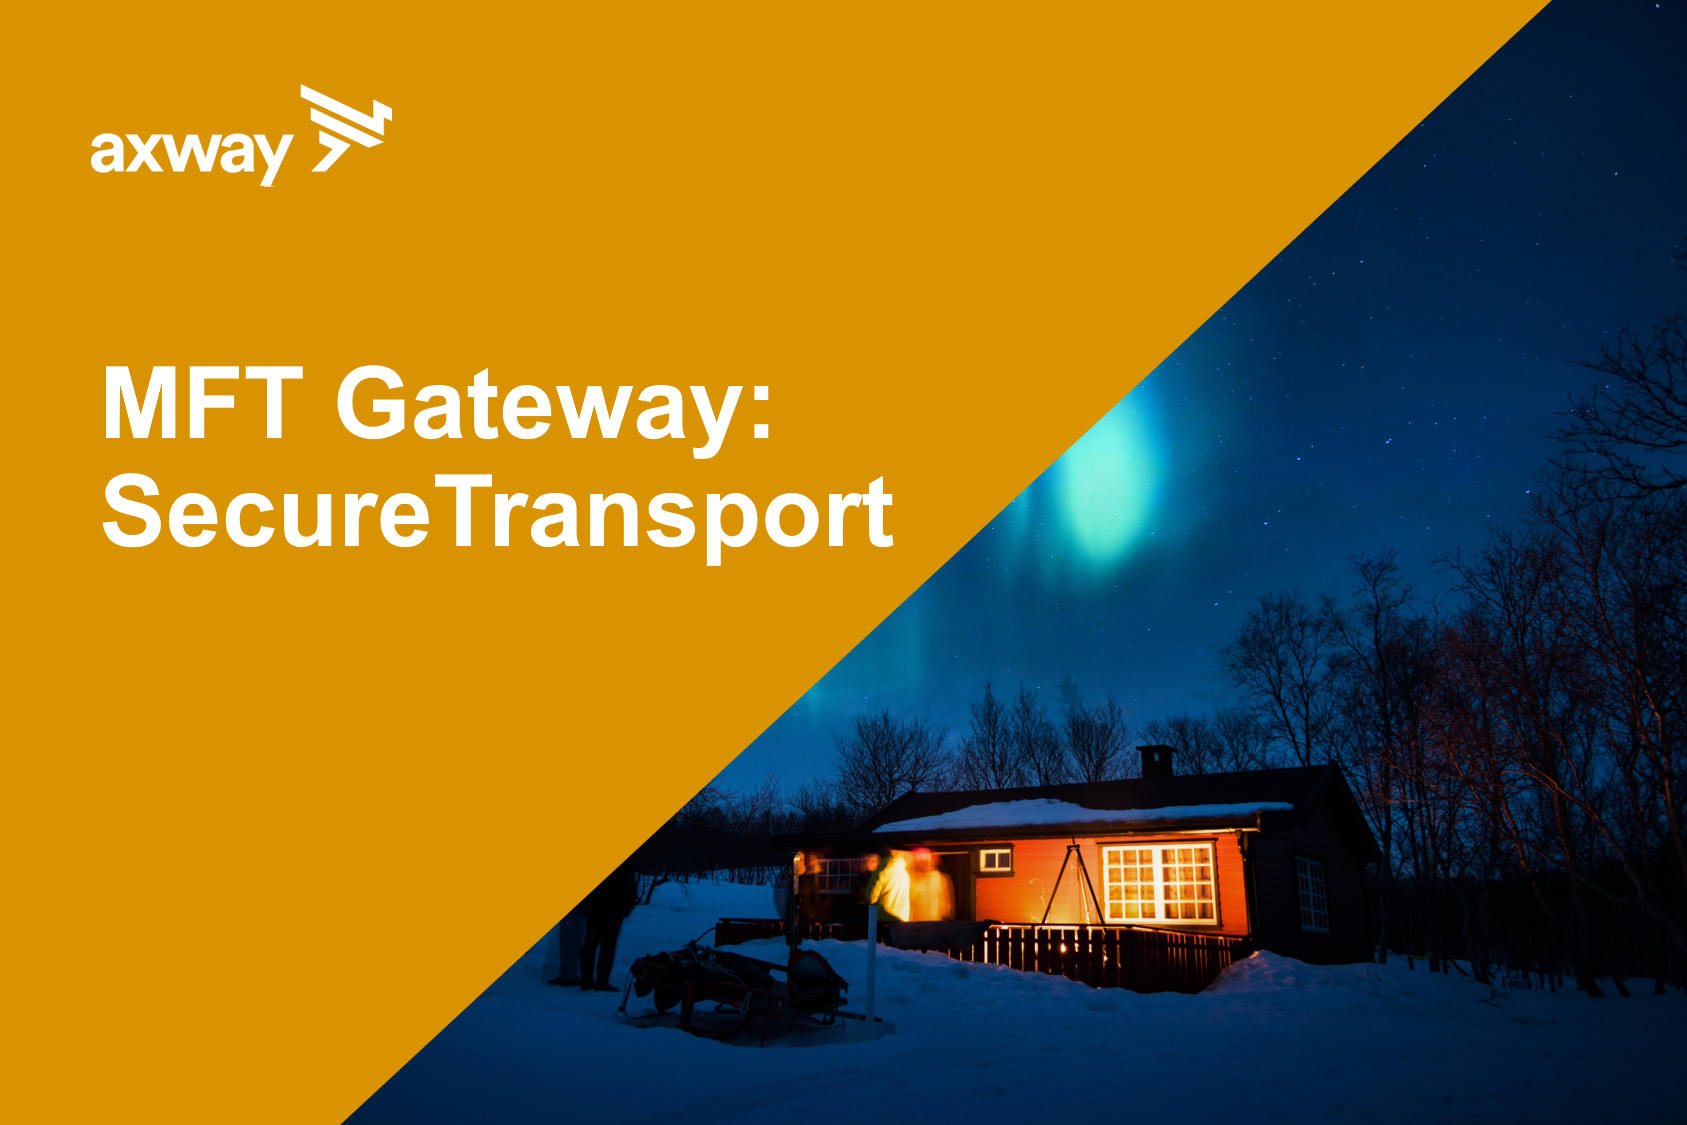 Axway MFT Gateway: SecureTransport